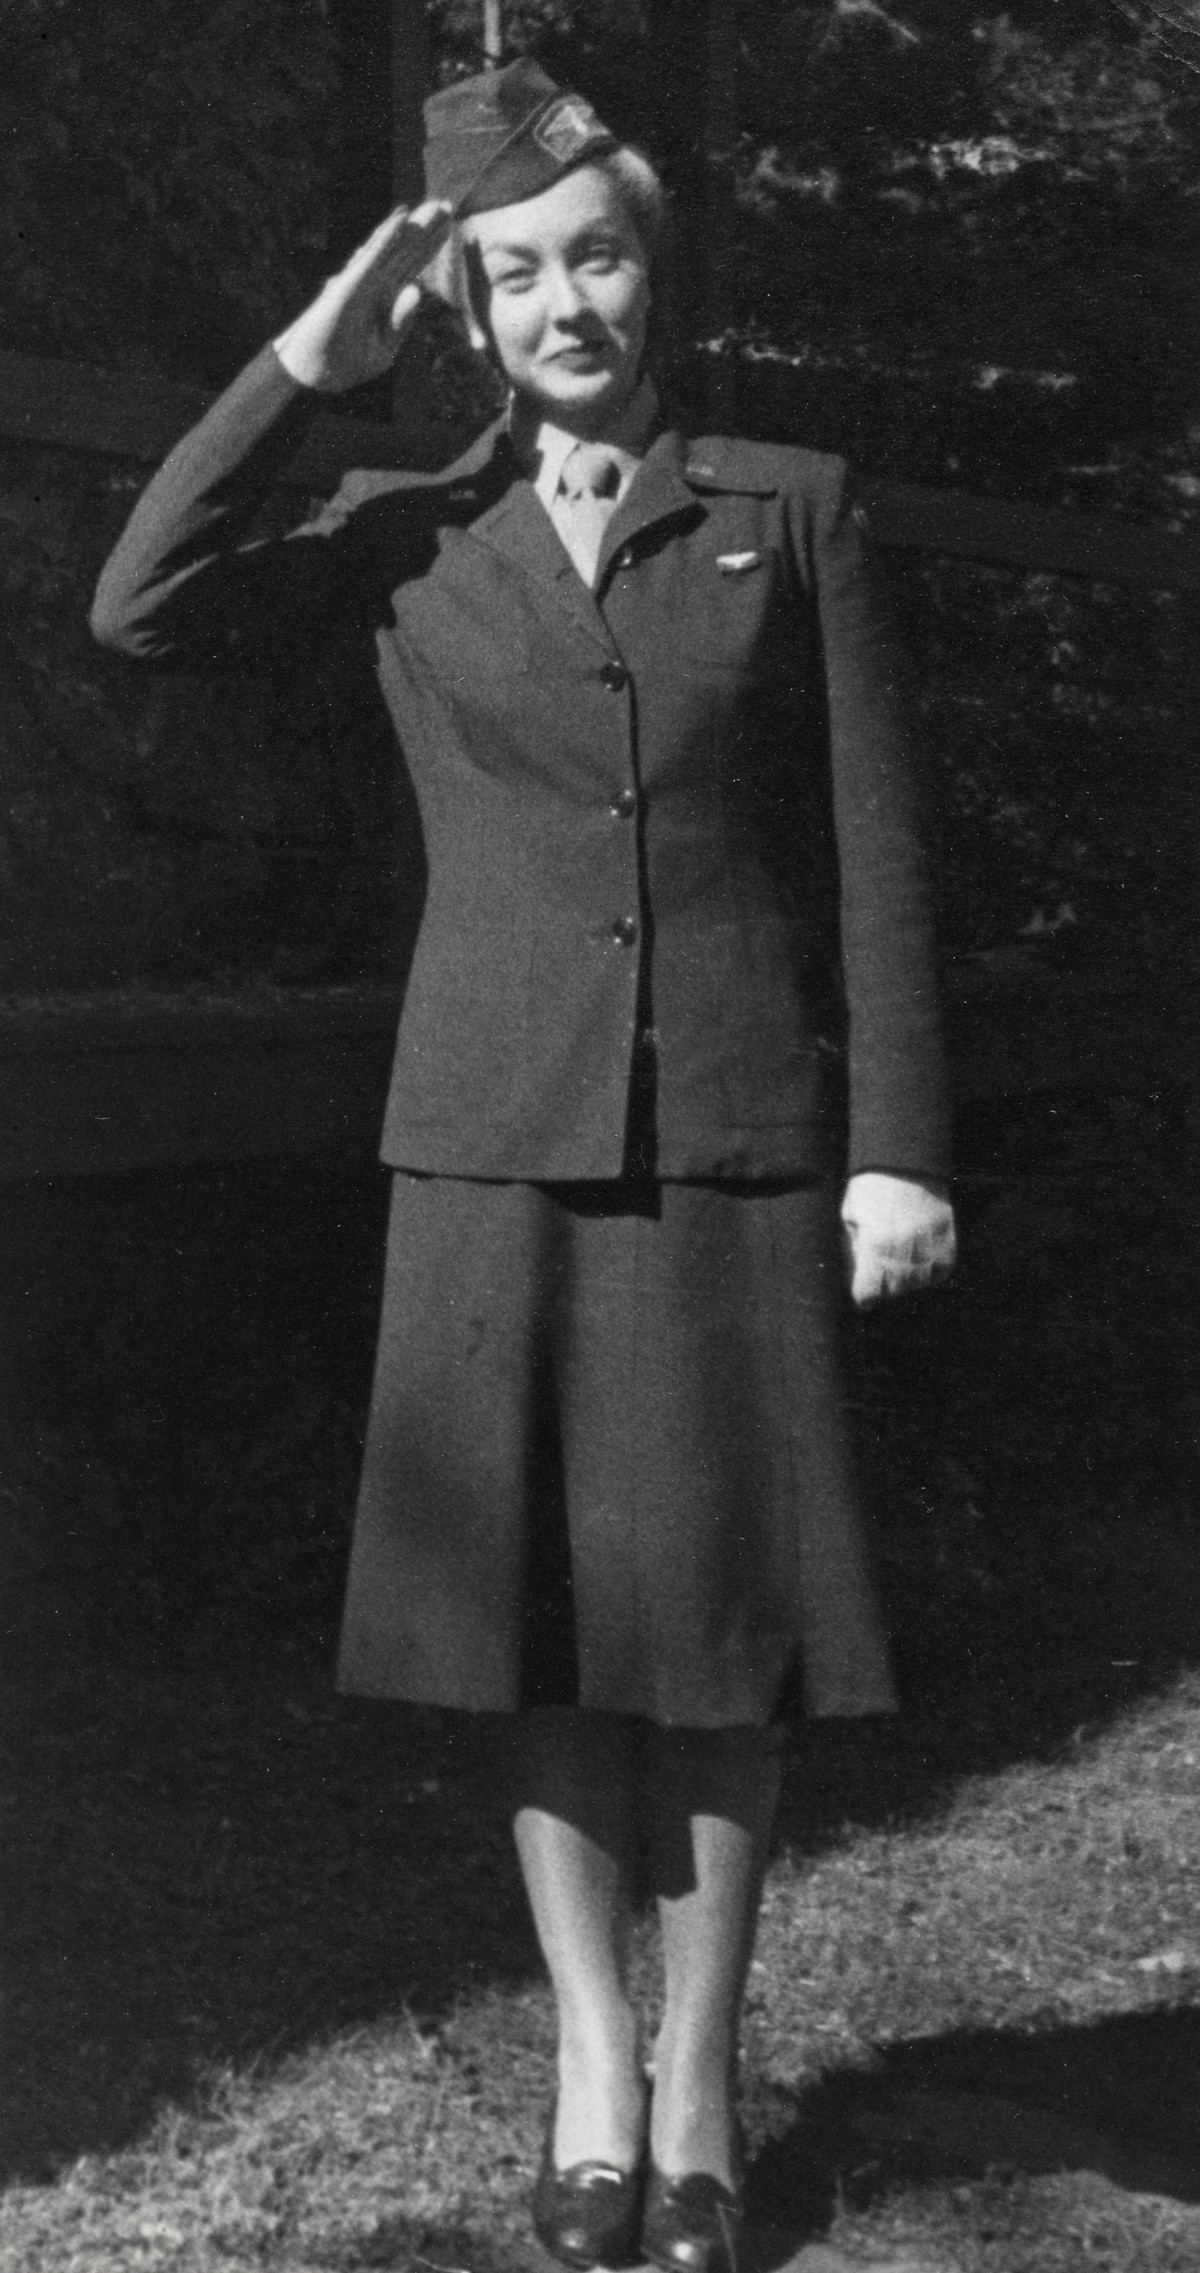 Baronova in military uniform (1945)